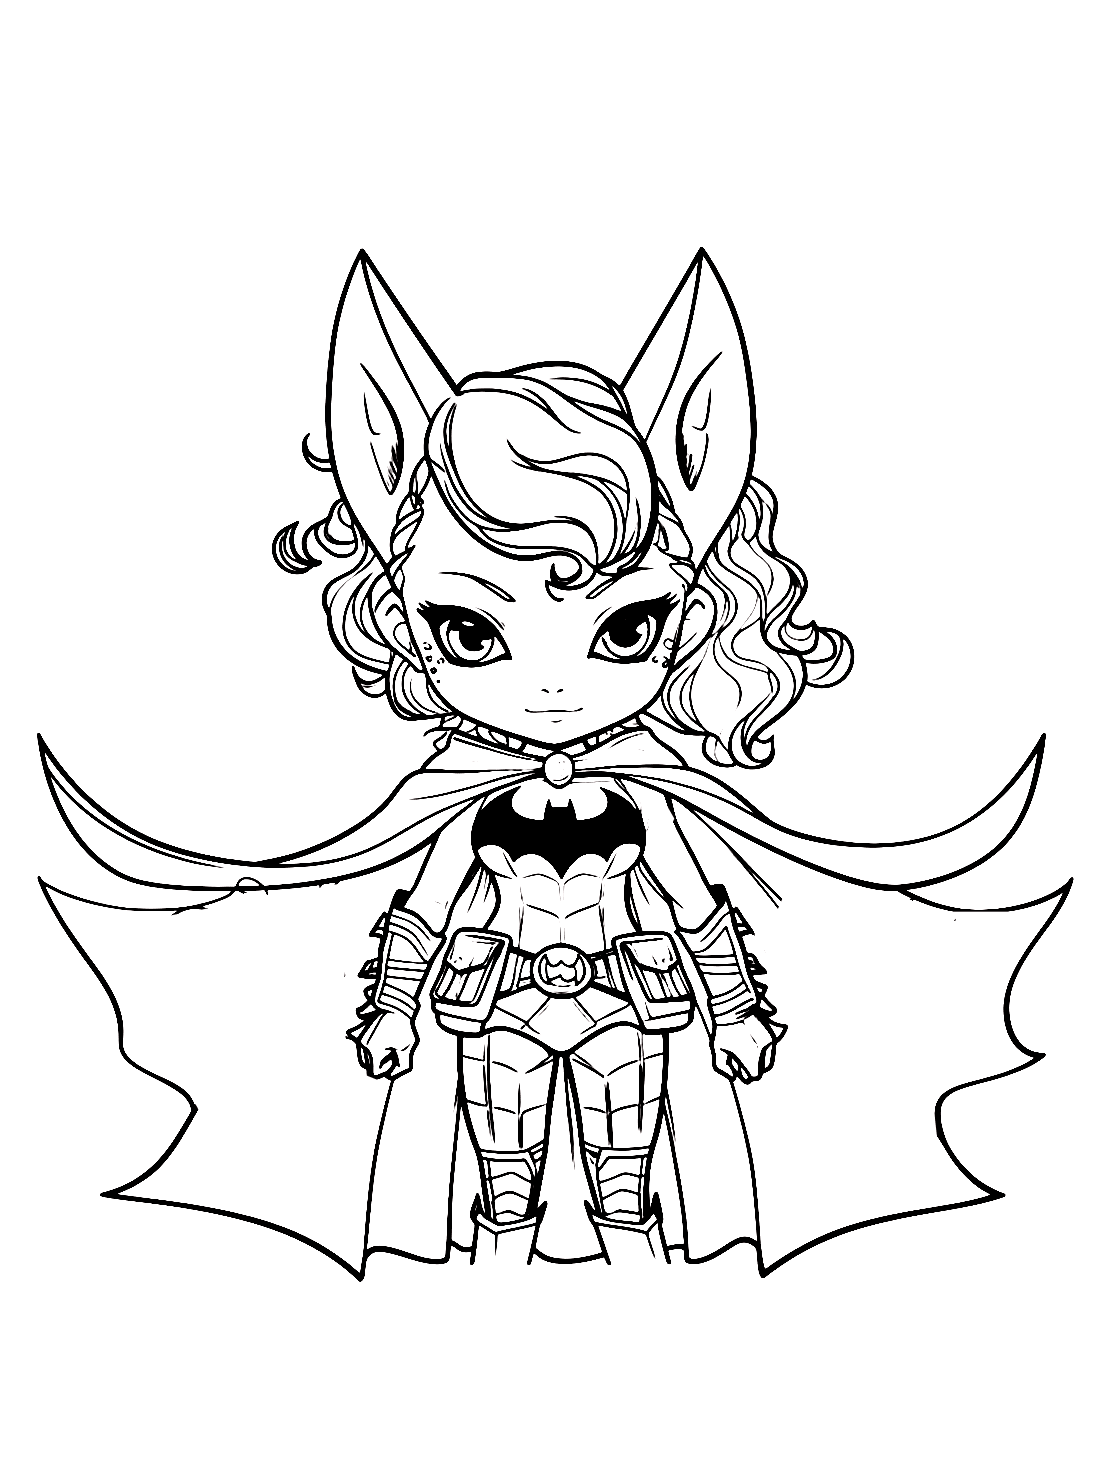 Batwoman drawing